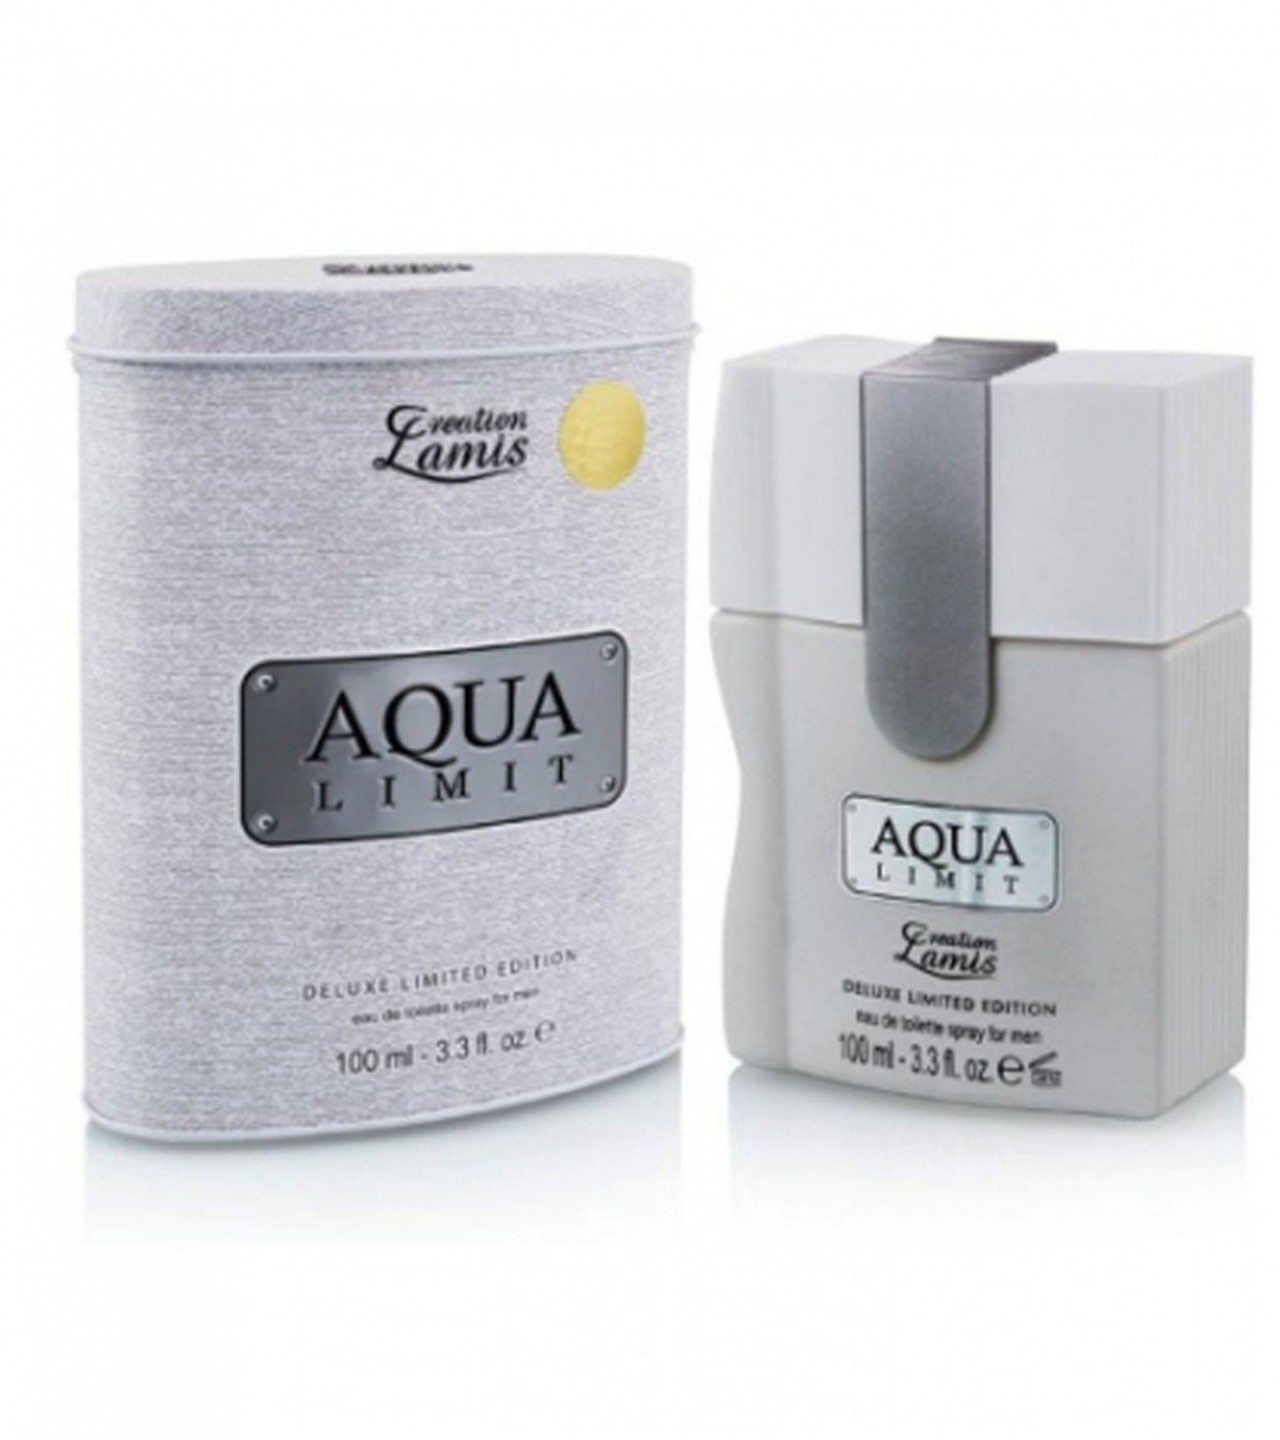 Creation Lamis Aqua Limit Perfume For Men - 100 ml